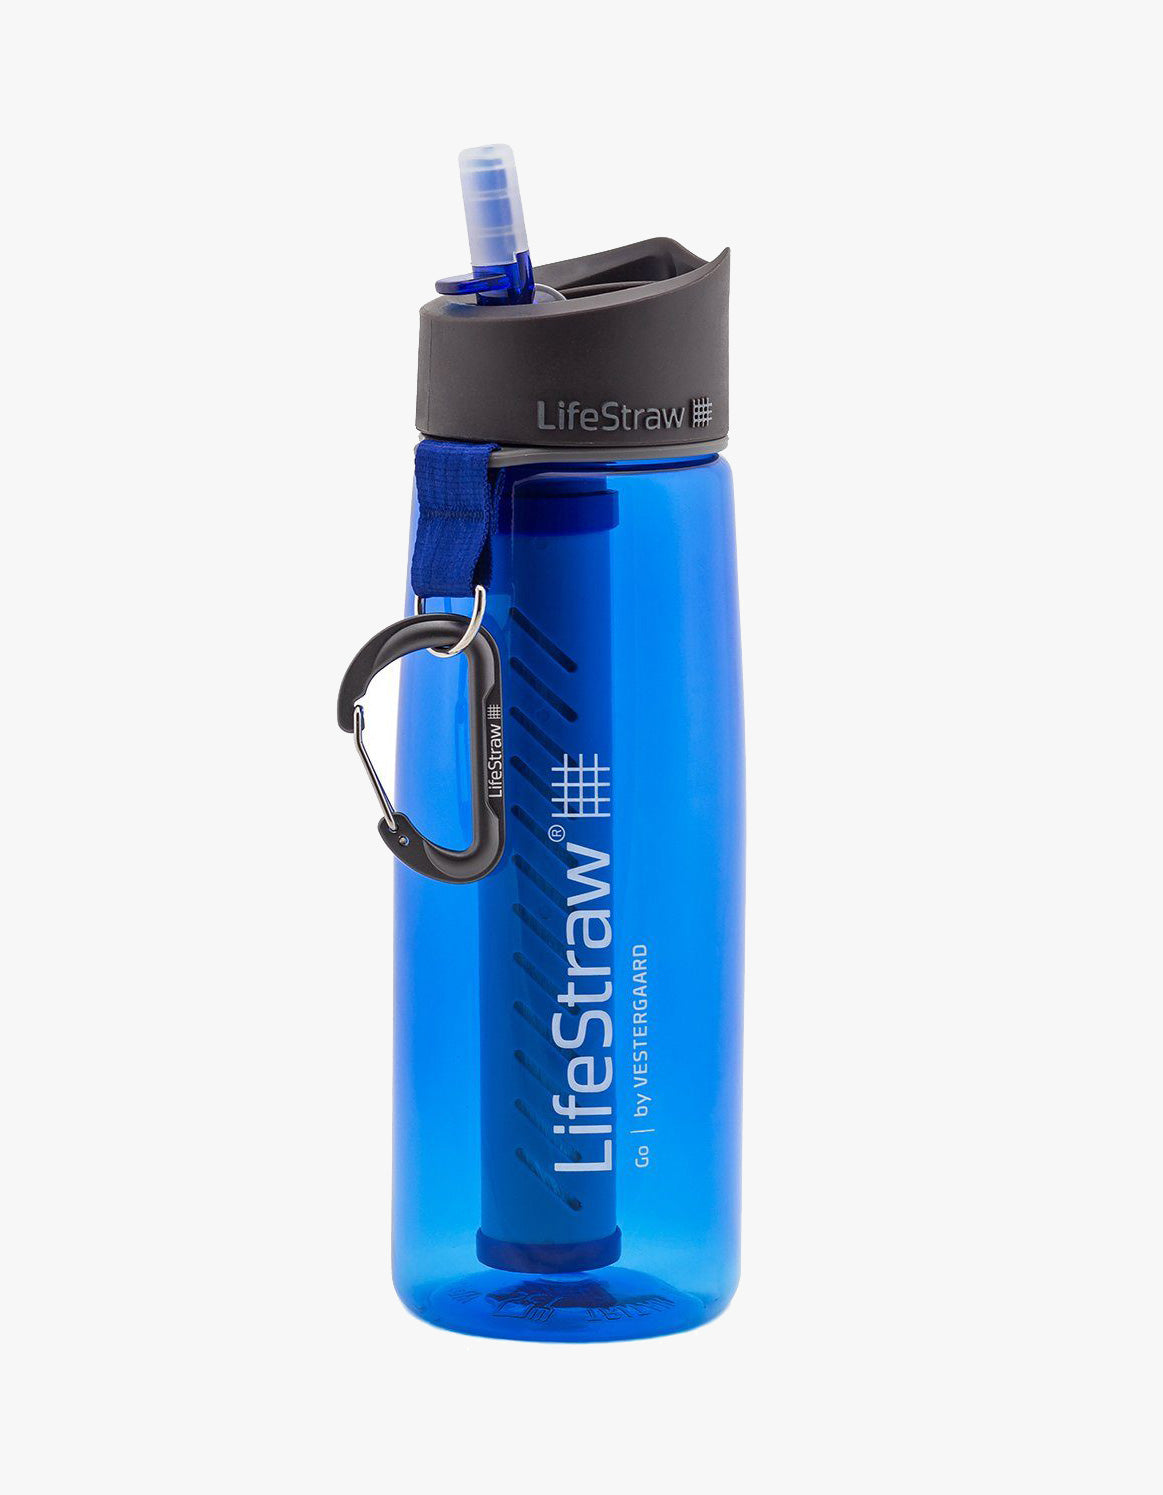 LifeStraw Peak Series Personal Water Filter Straw - Blue